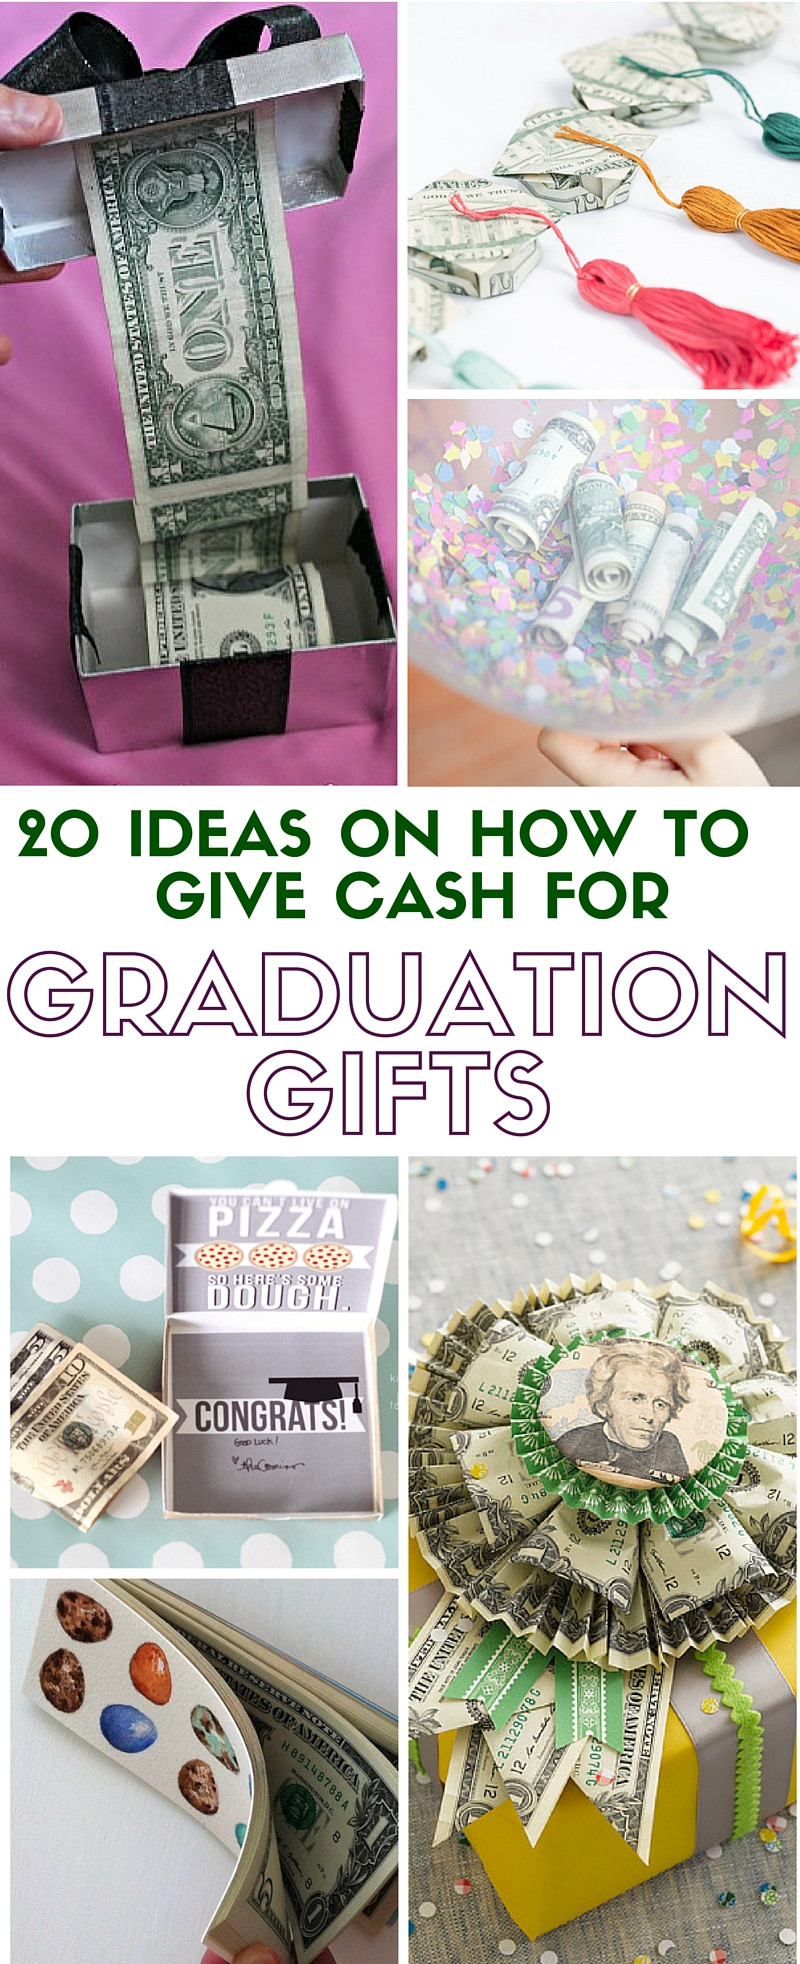 Best College Graduation Gift Ideas
 31 Back To School Teacher Gift Ideas The Crafty Blog Stalker